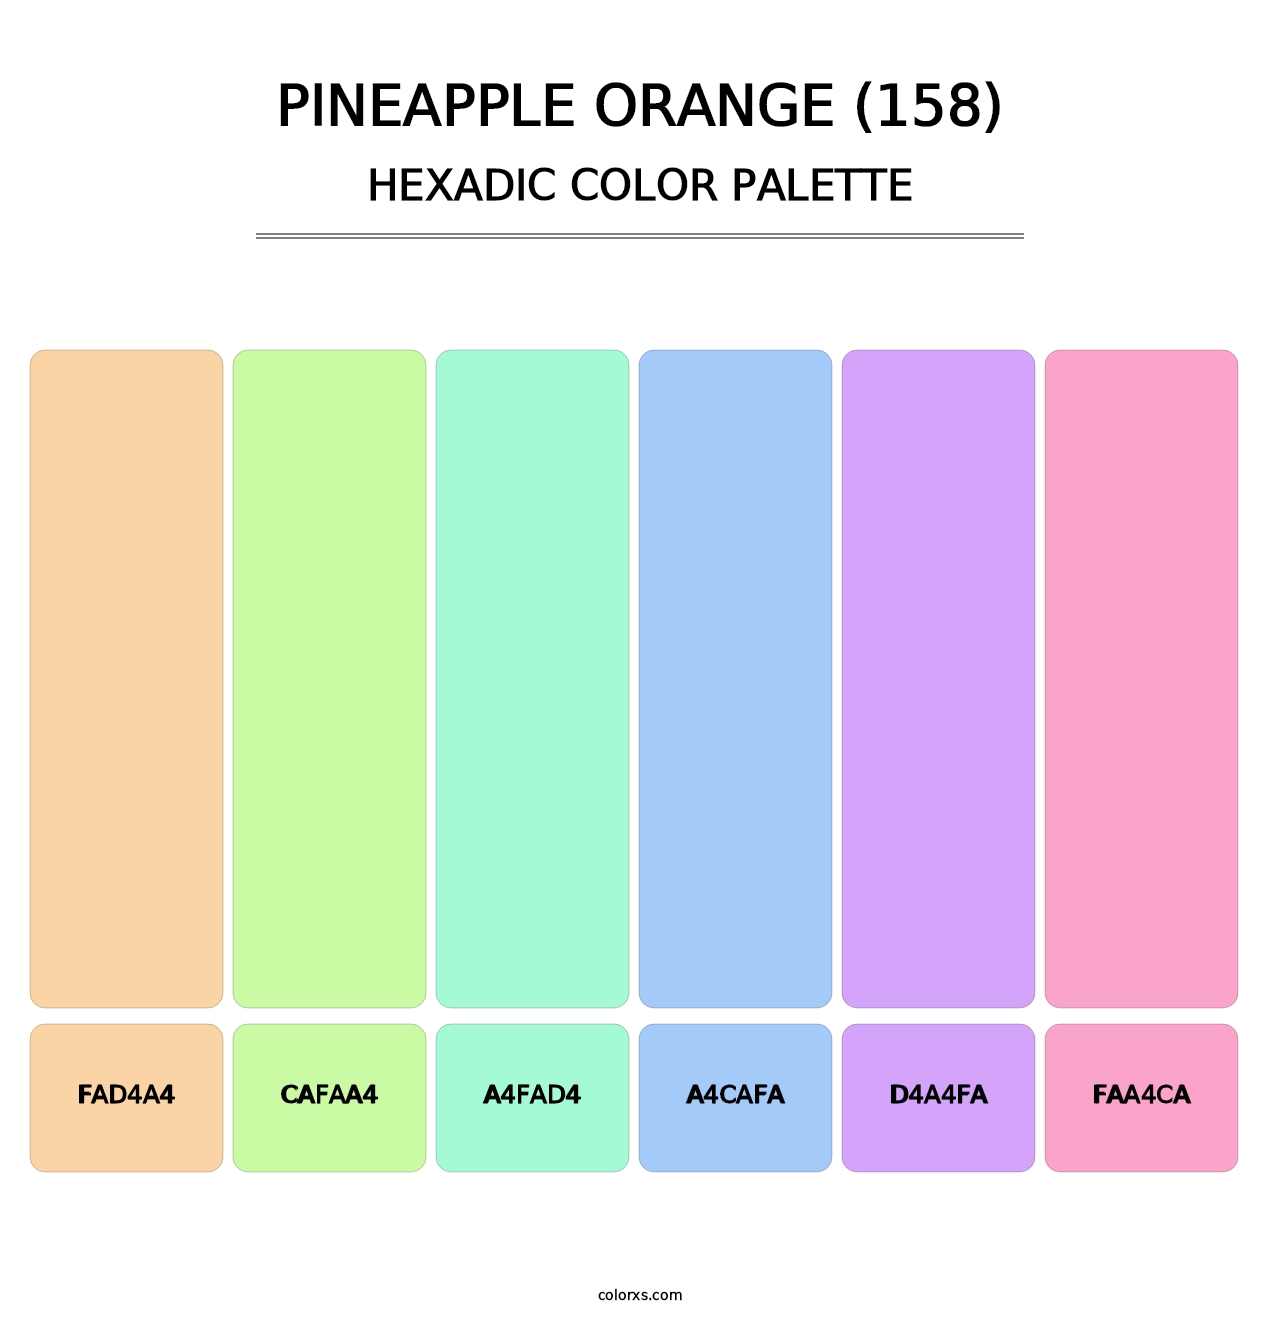 Pineapple Orange (158) - Hexadic Color Palette